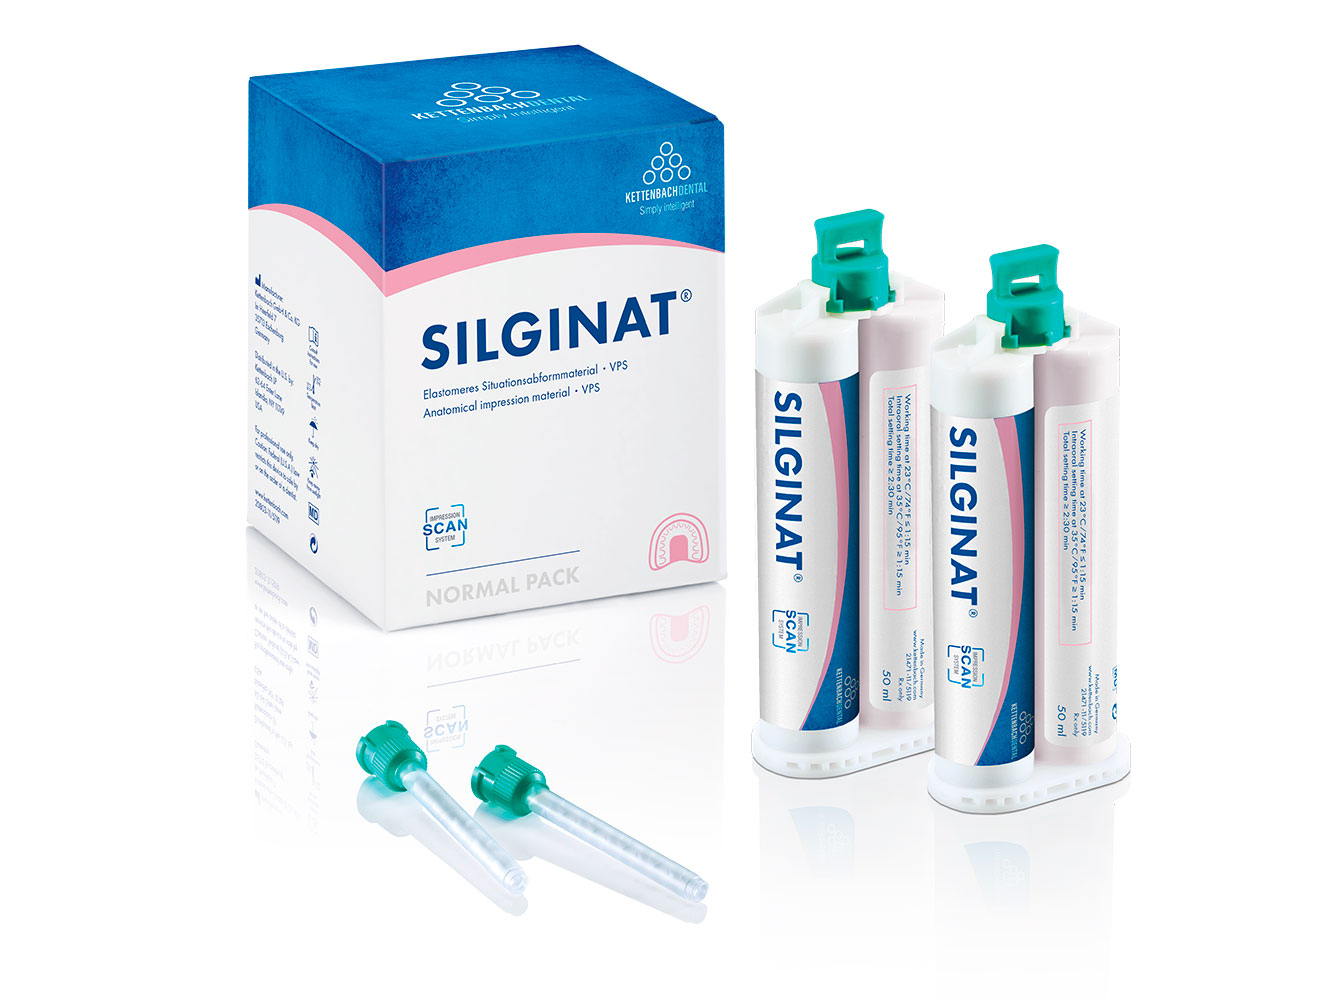 13846 Silginat Normal pack (6 x 50 ml, 6 mixing tips): Стоматологический А-силикон среднетекучий.